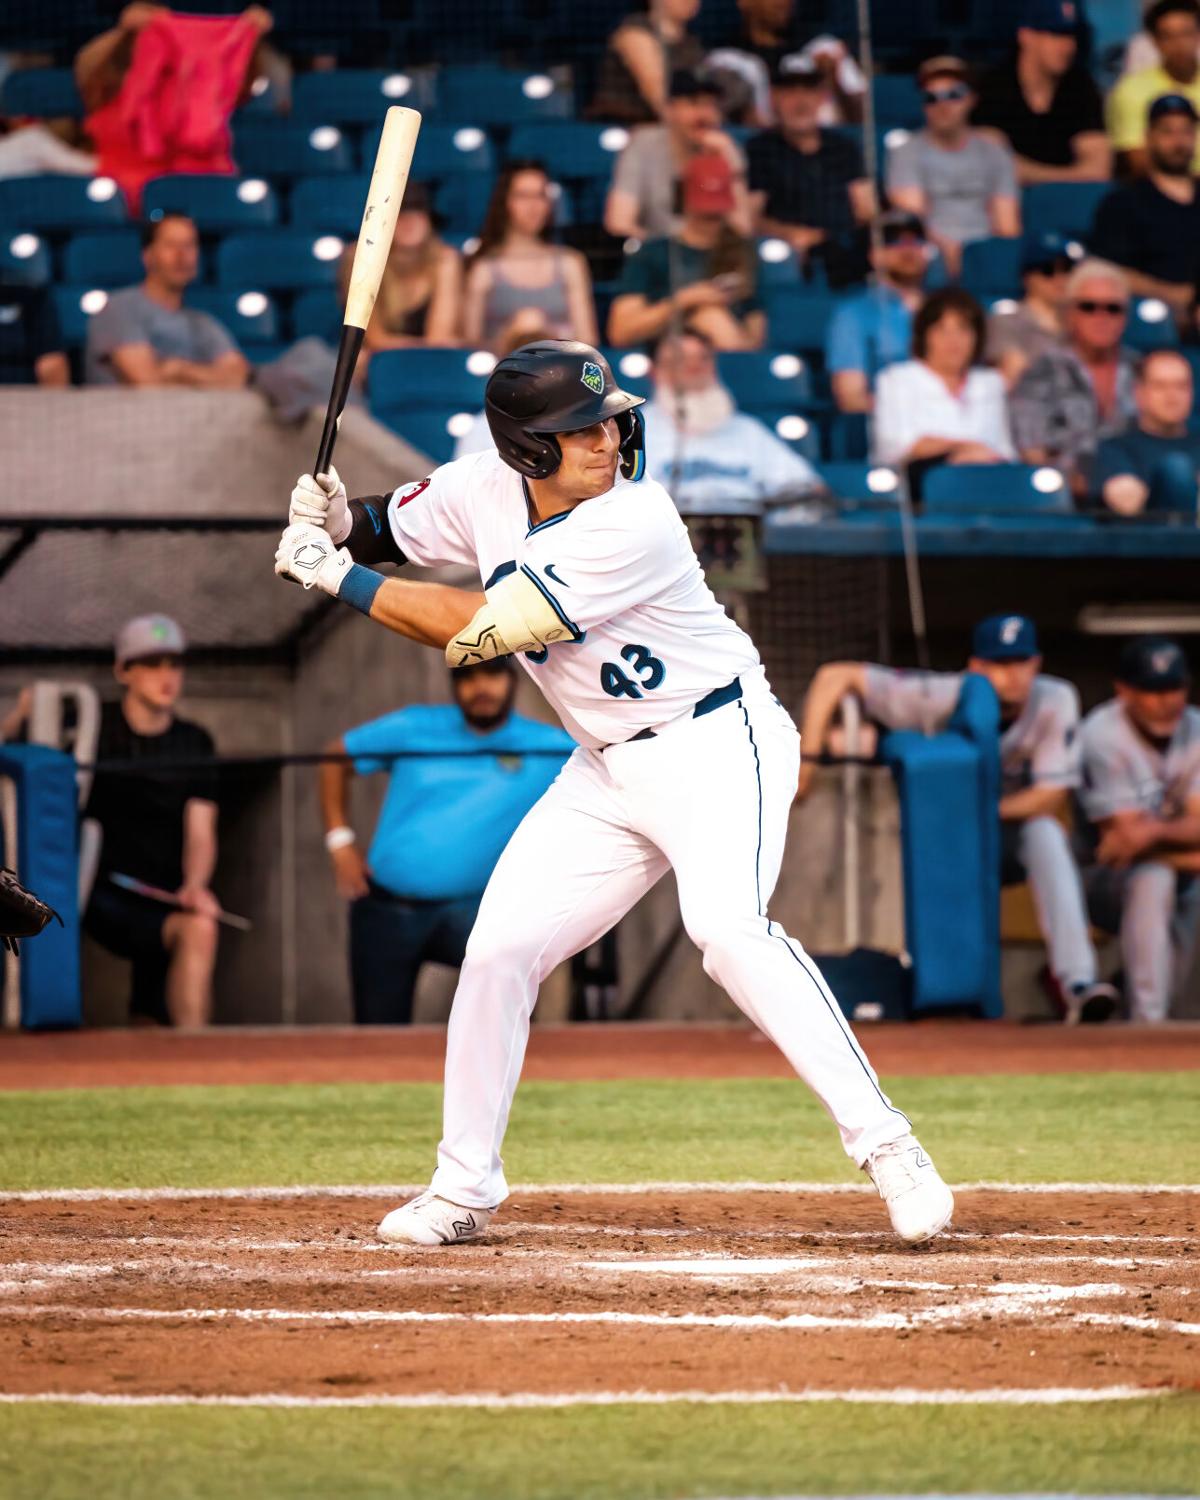 Baseball's 'Pudge' Rodriguez to visit El Paso